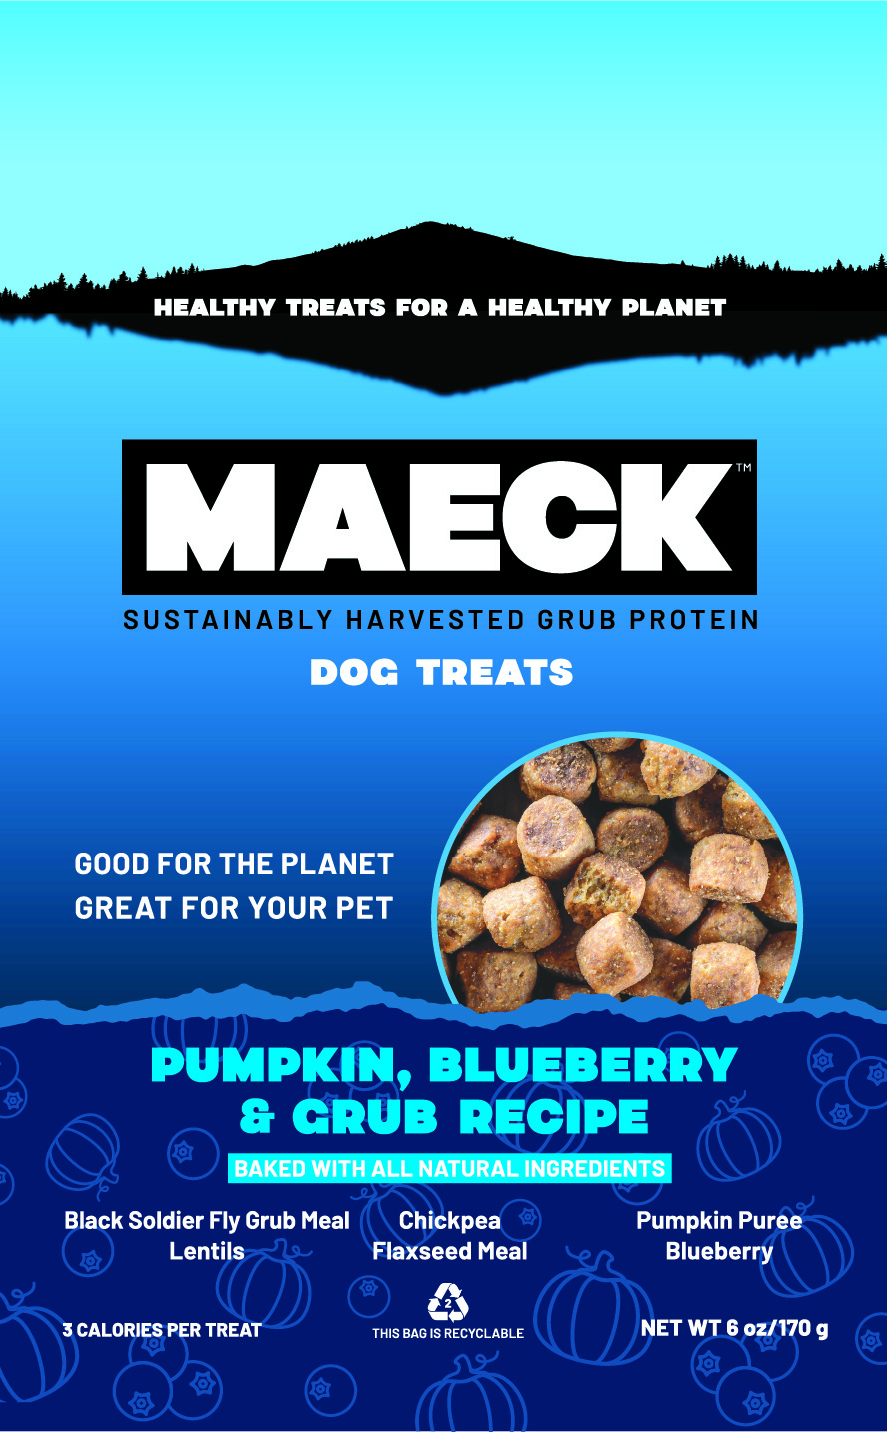 Pumpkin & Blueberry Grub Recipe Pet Treats